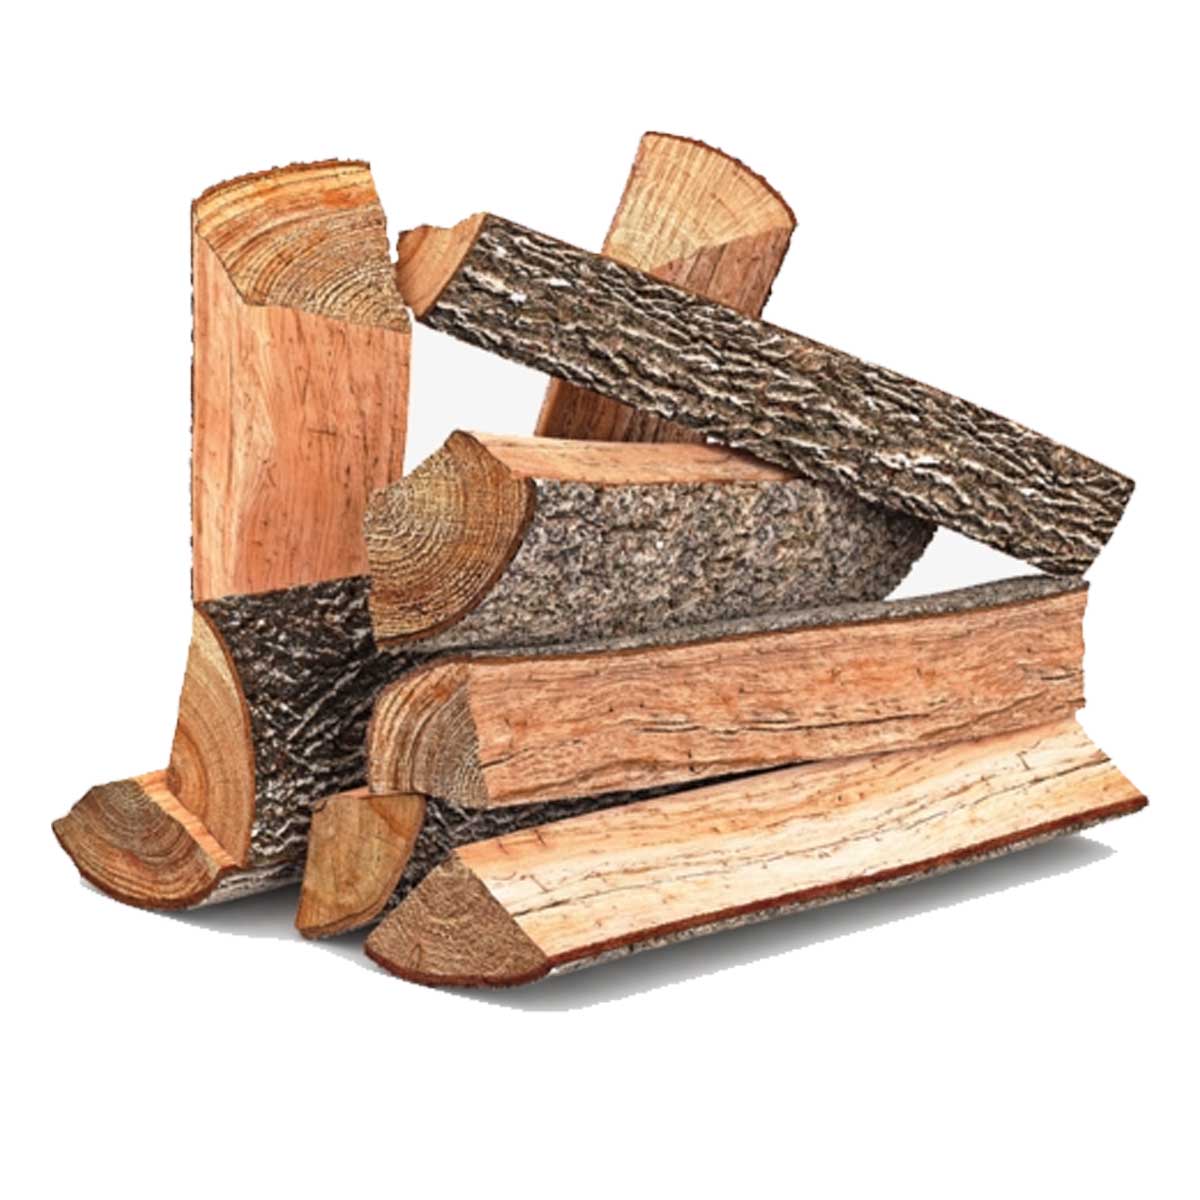 braai wood prices